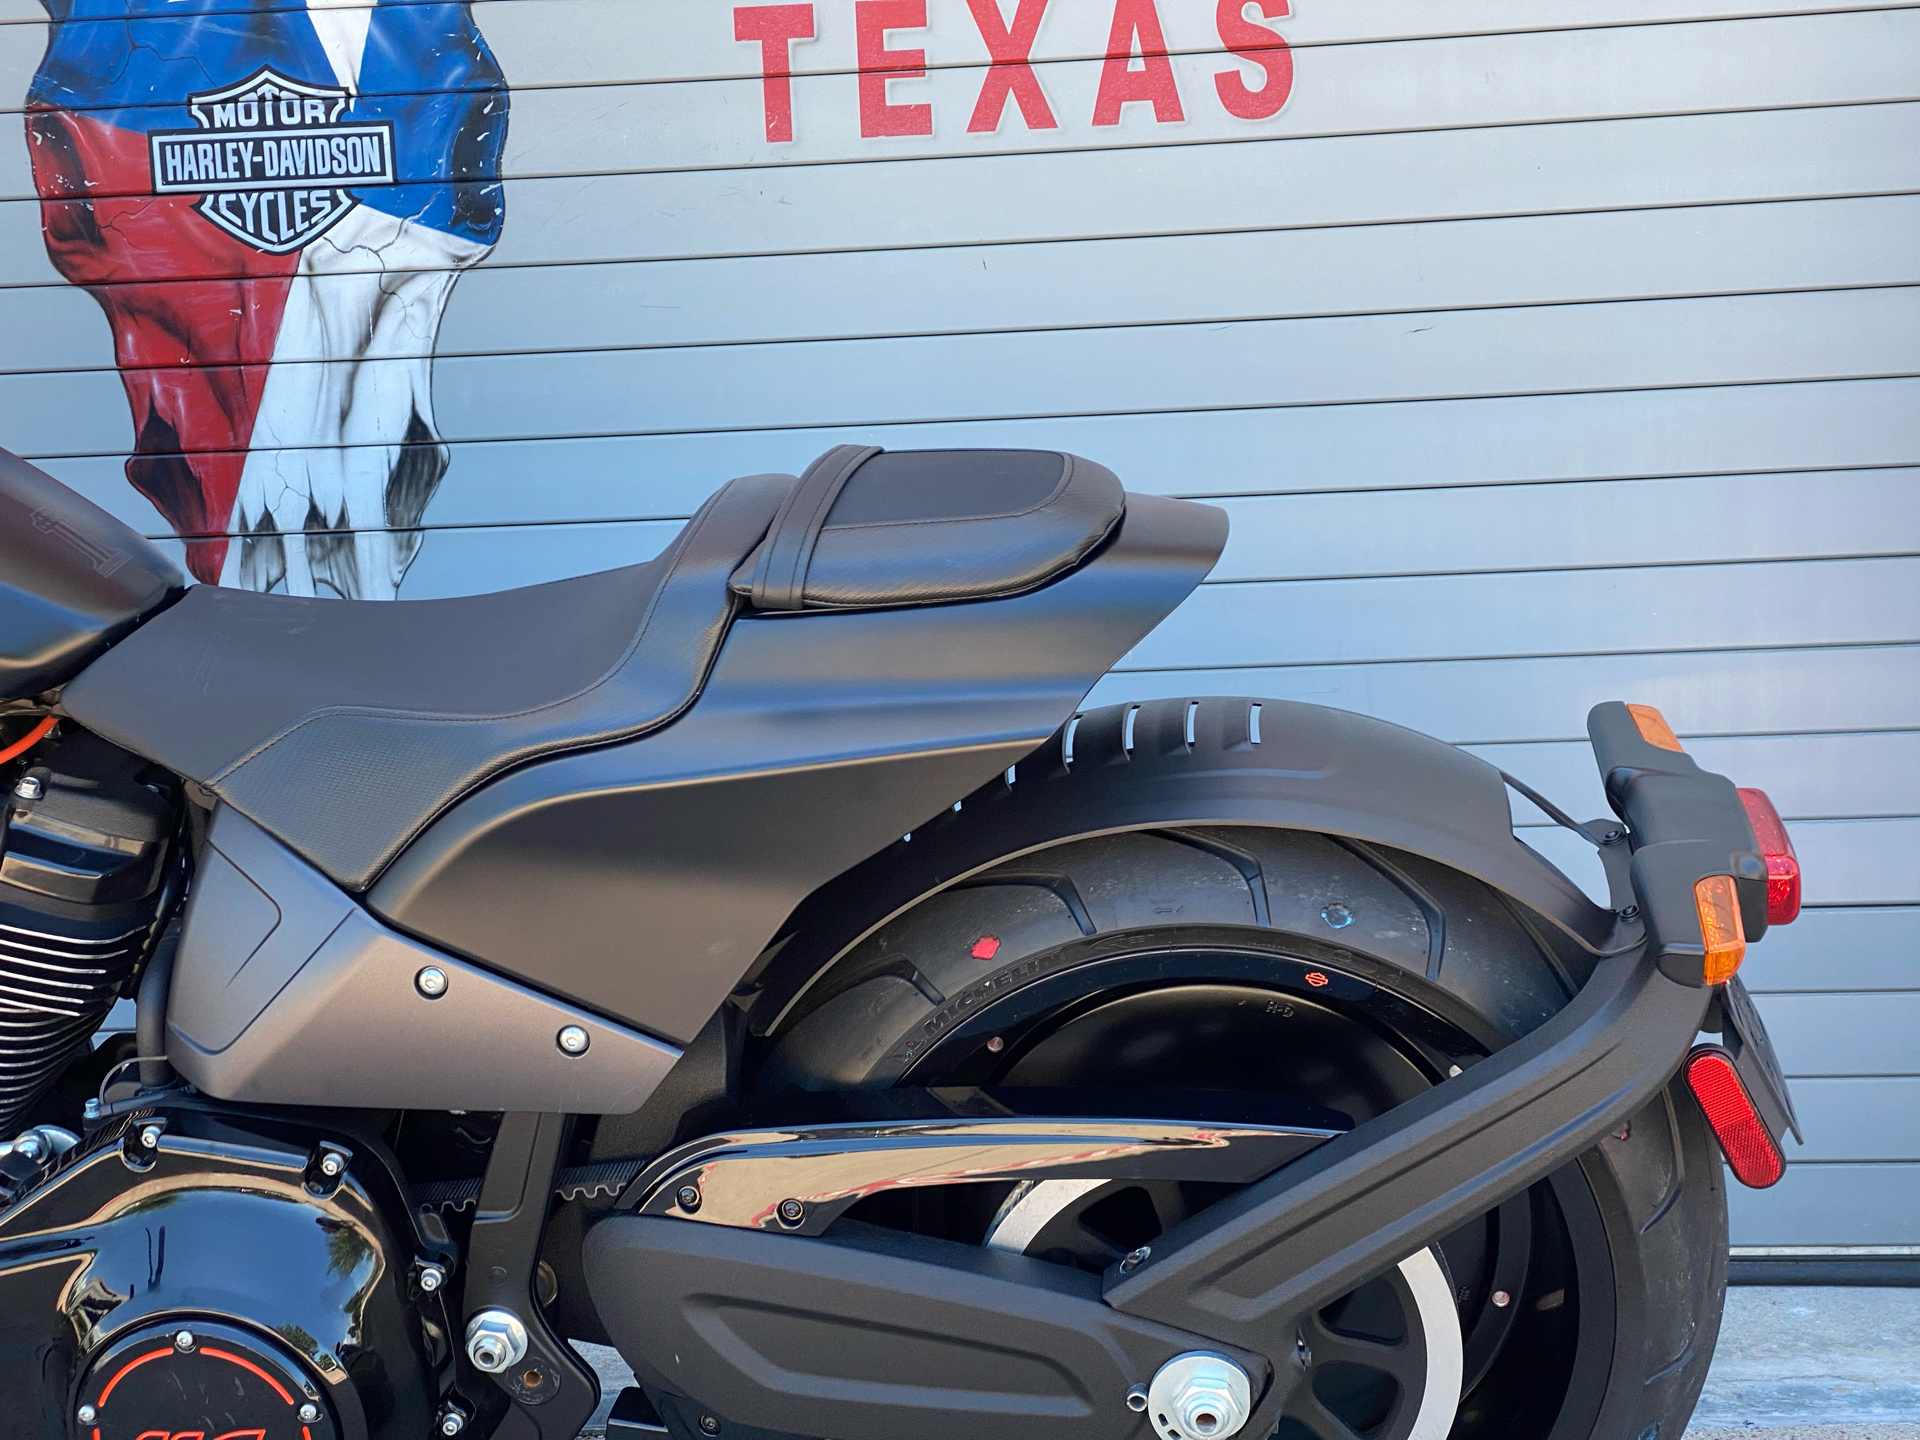 2019 Harley-Davidson FXDR™ 114 in Grand Prairie, Texas - Photo 13